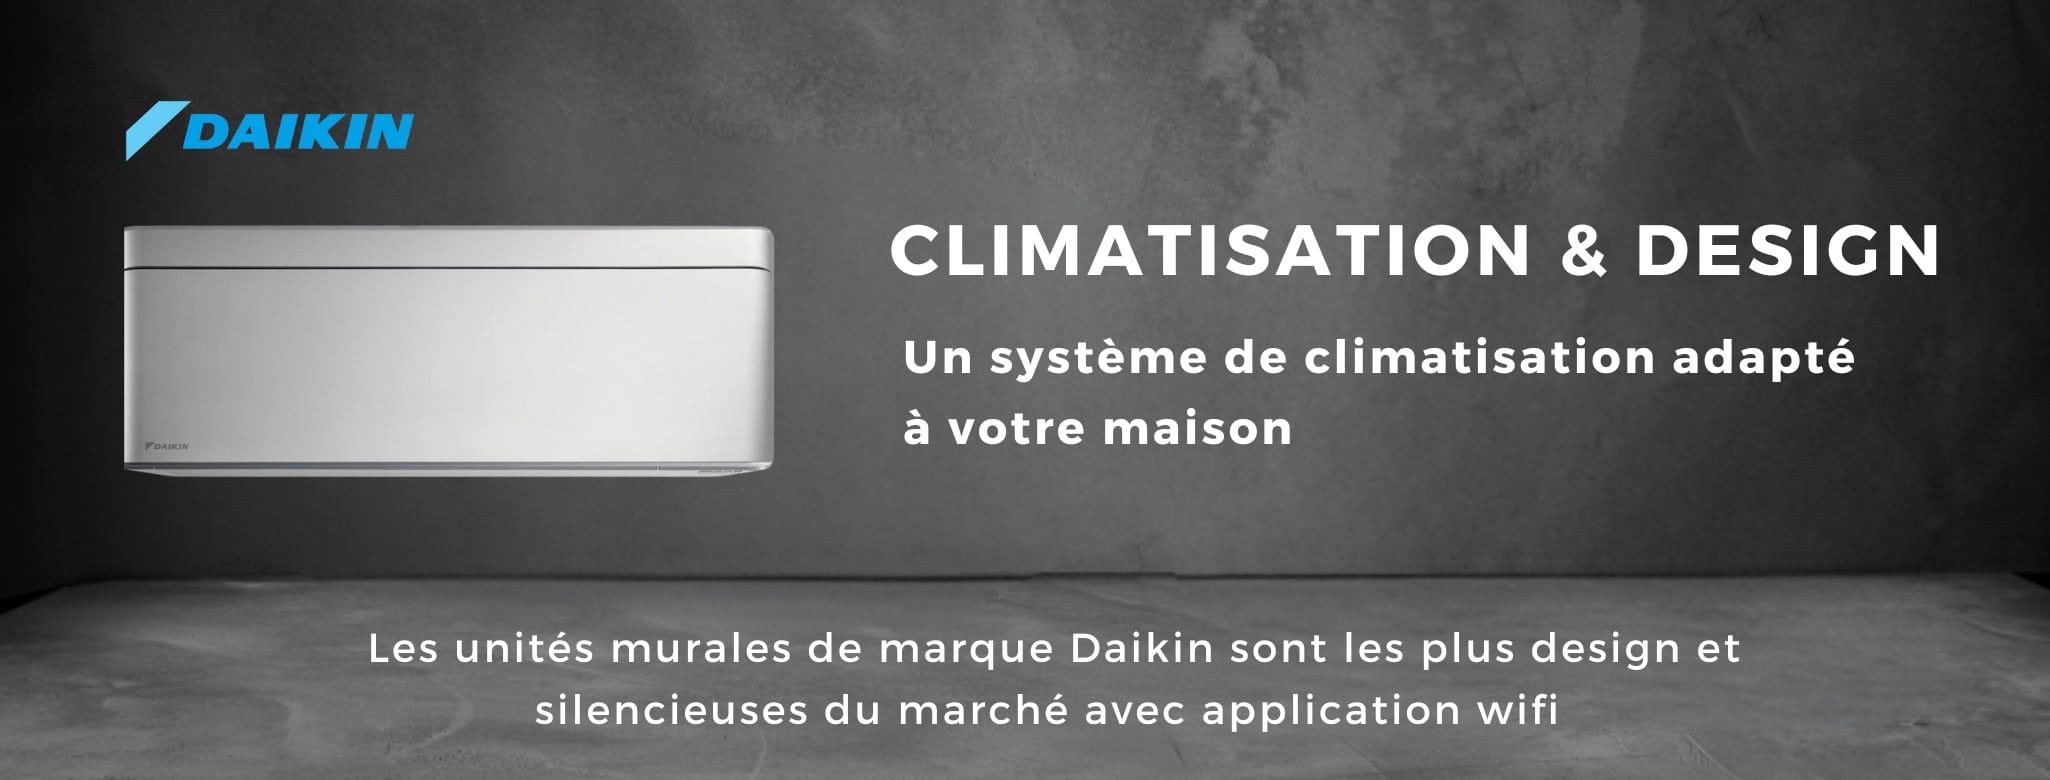 1-climatisation-maison-daikin-electro-climat-design